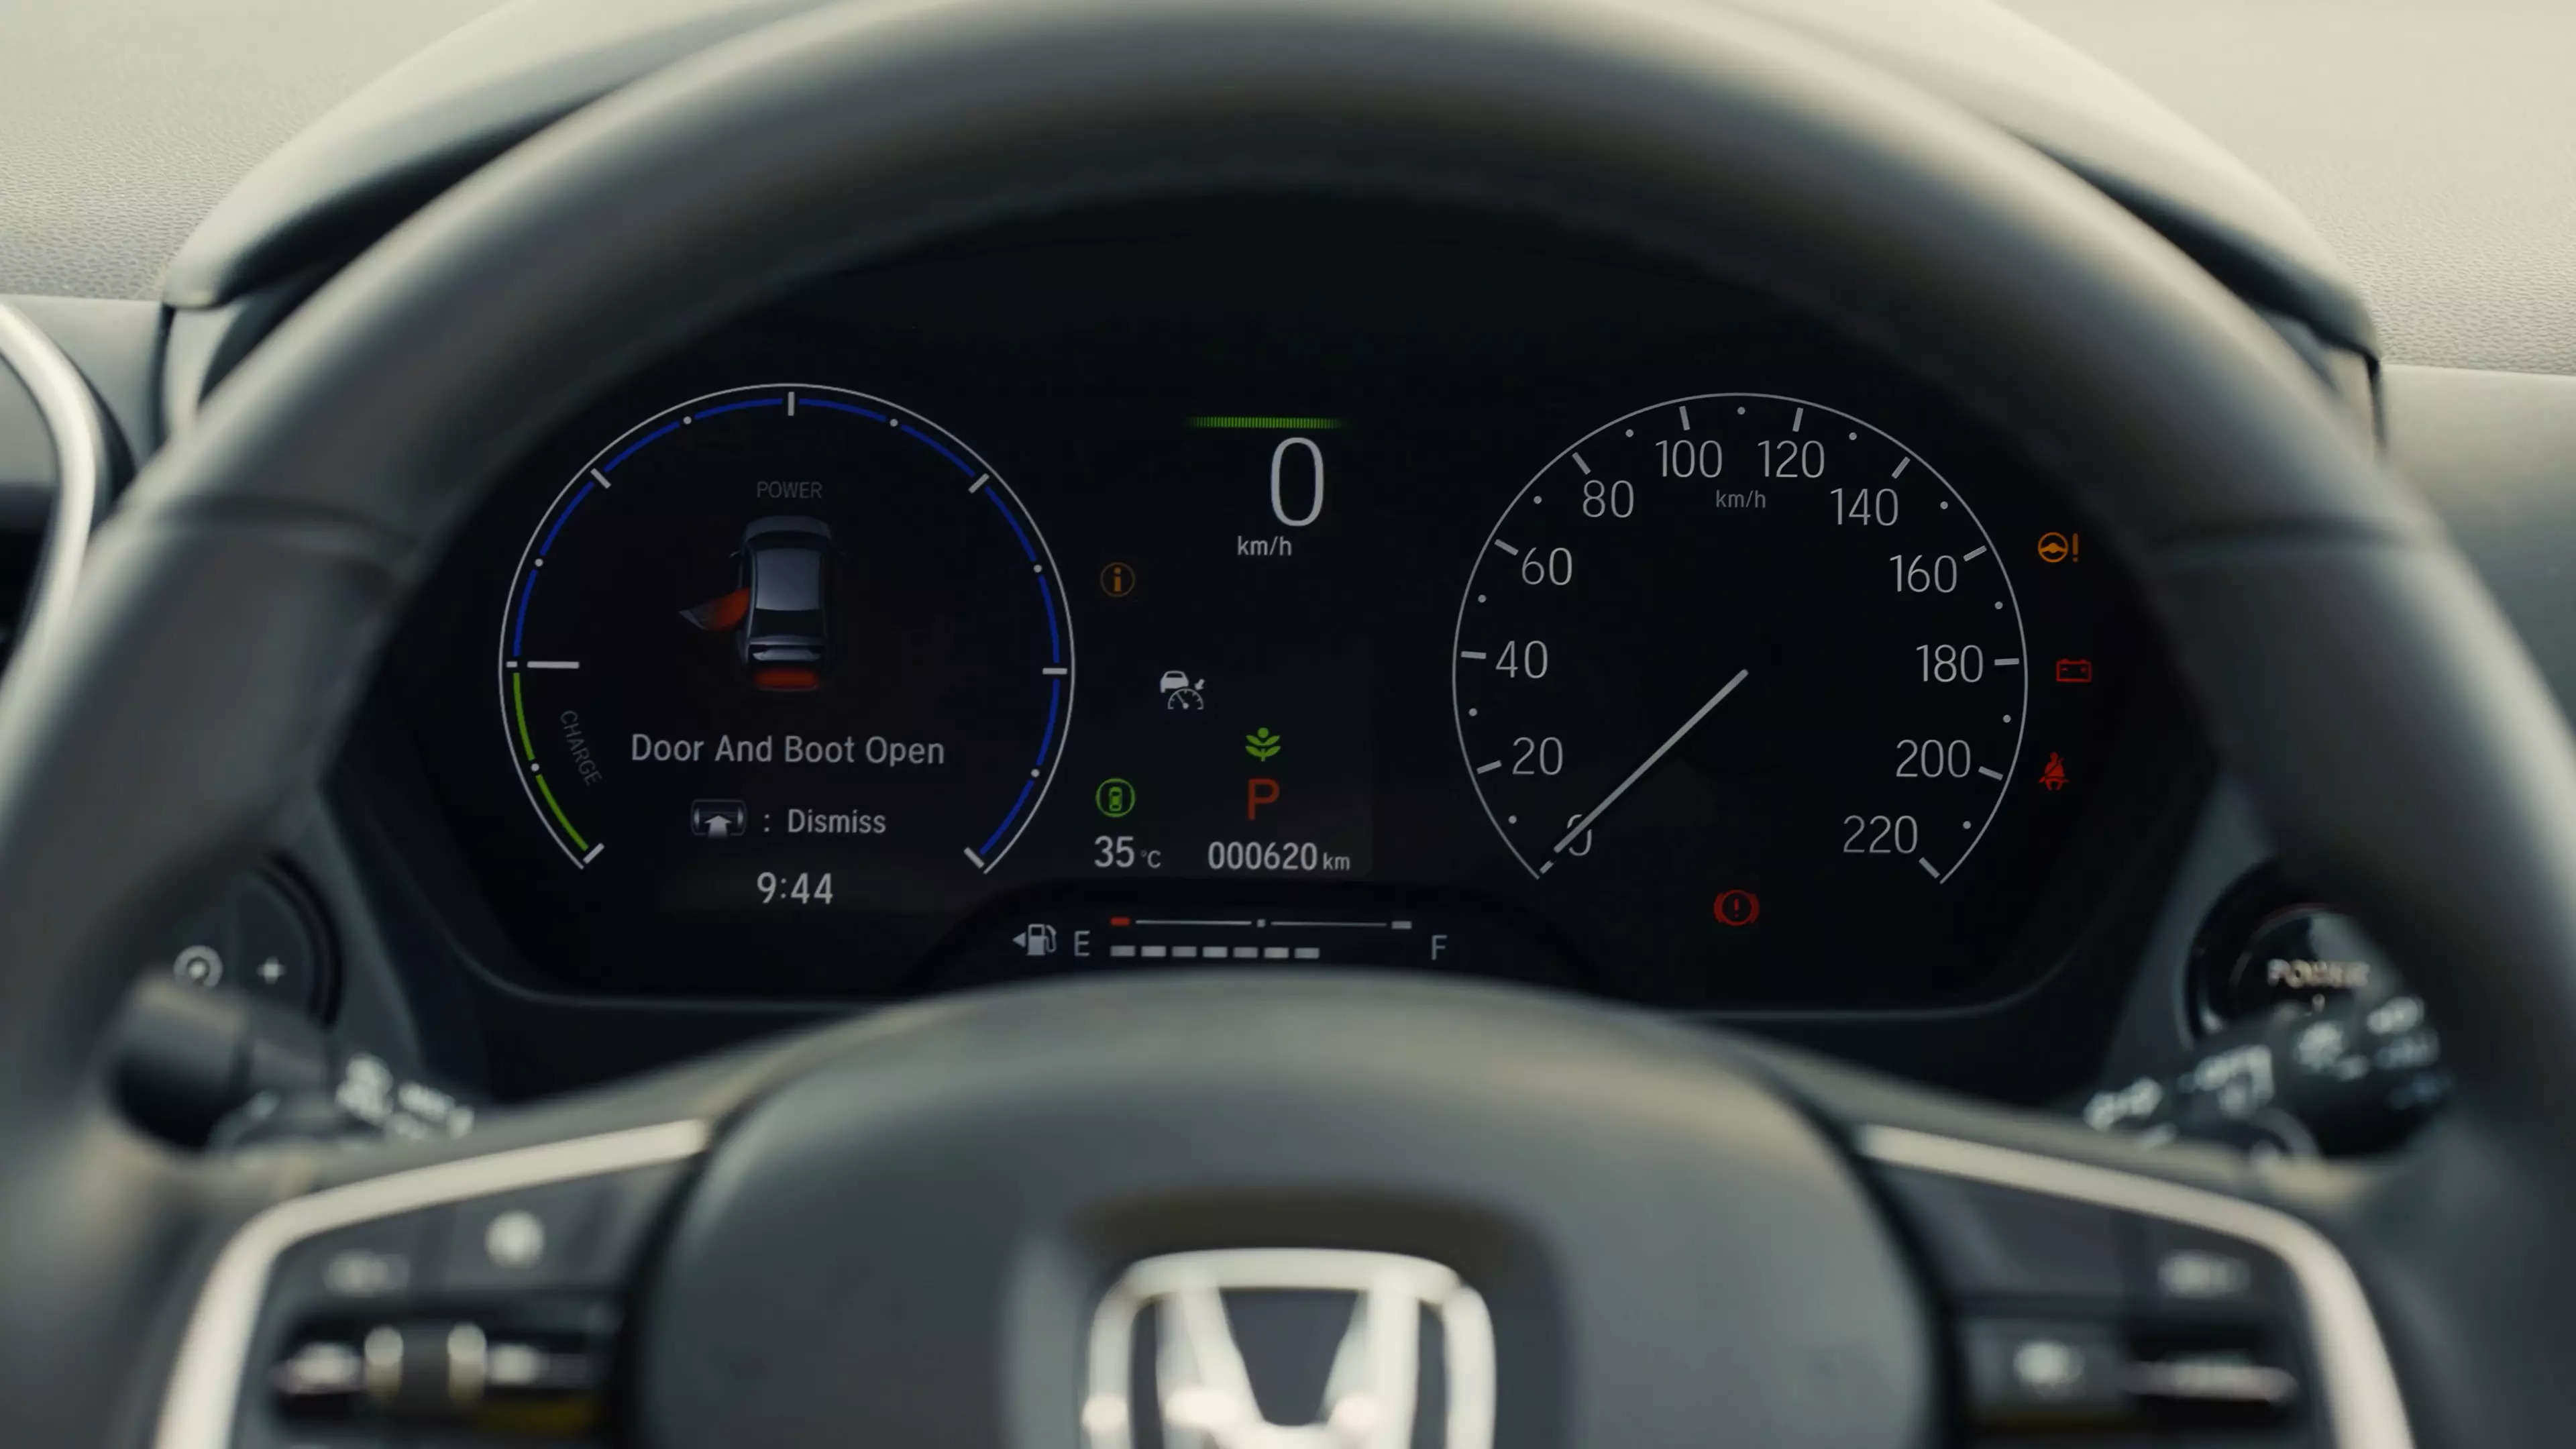 Honda City hybrid review : Peerless but not flawless